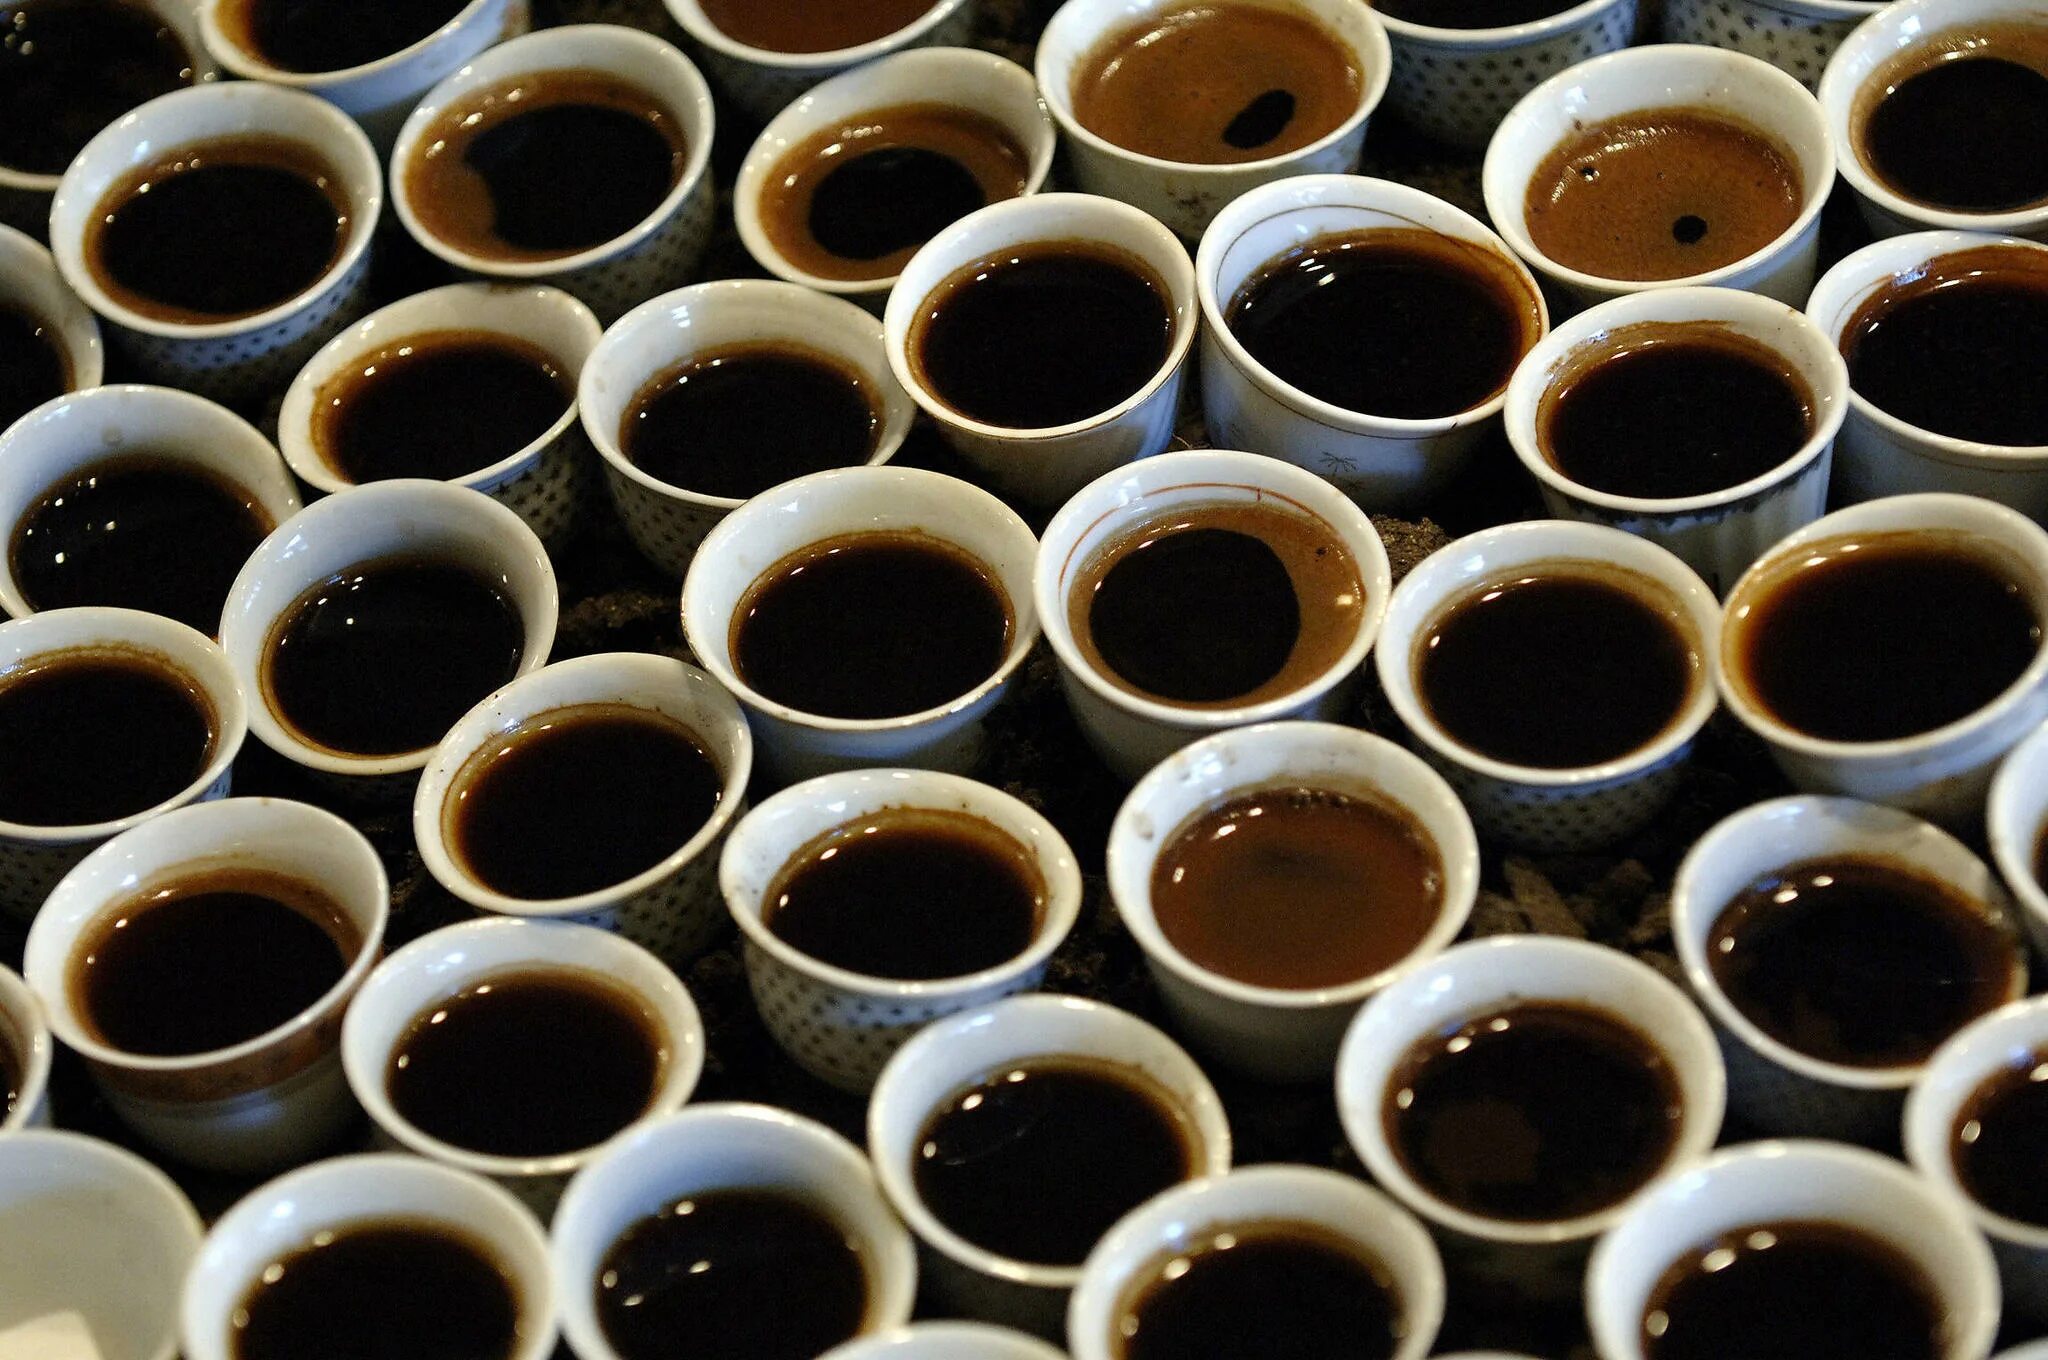 A lot of Coffee. Coffee Light. Картинки Drink a lot of Coffee. Lot of Cup Coffee. Lots of close